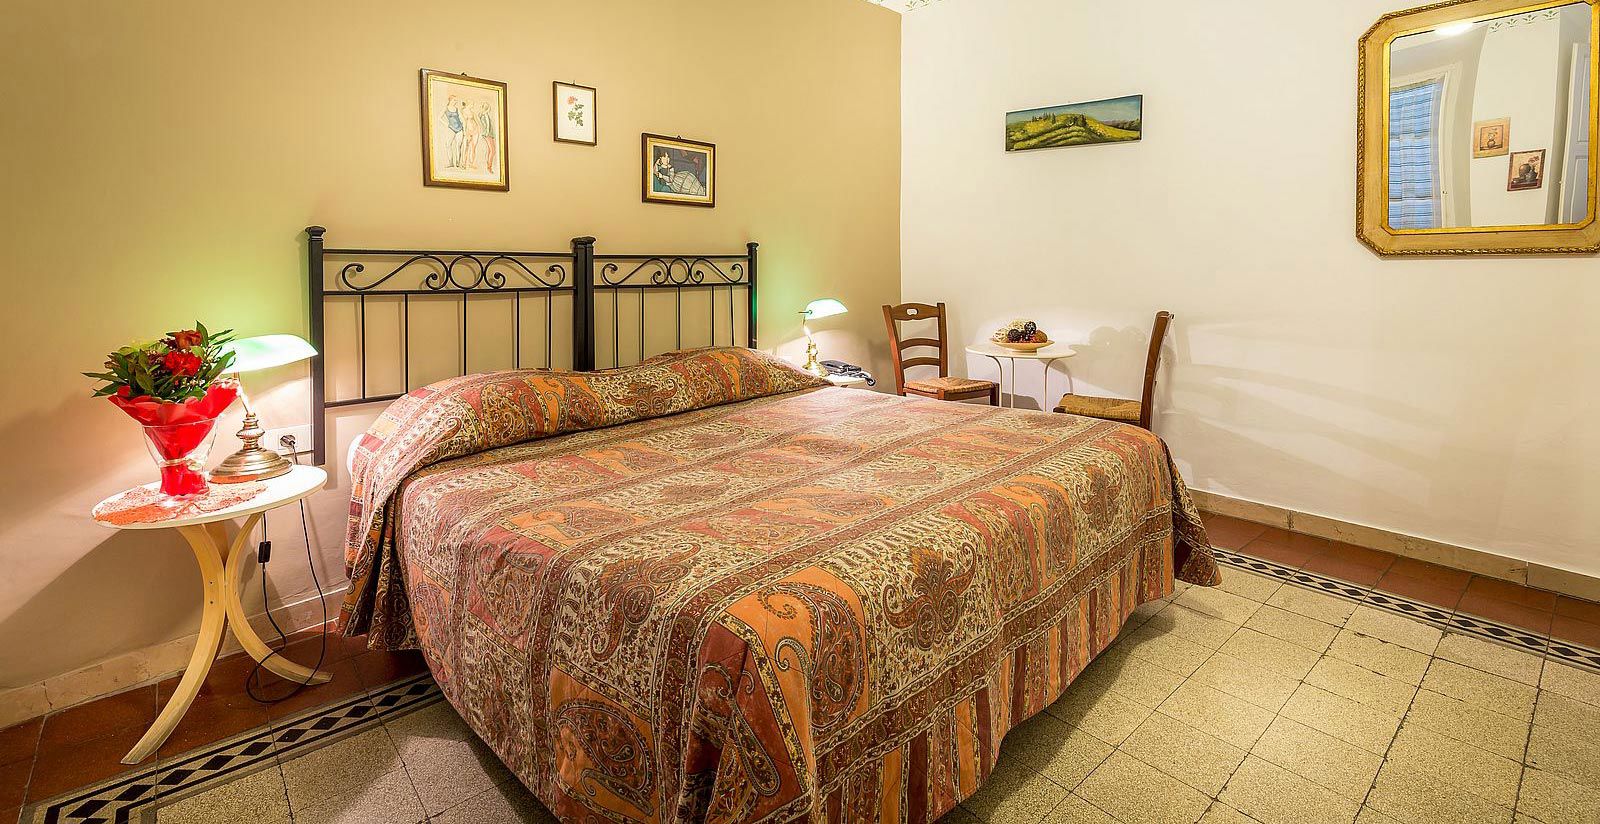 Hotel Ferretti - Classic Room with View on Via delle Belle Donne 3